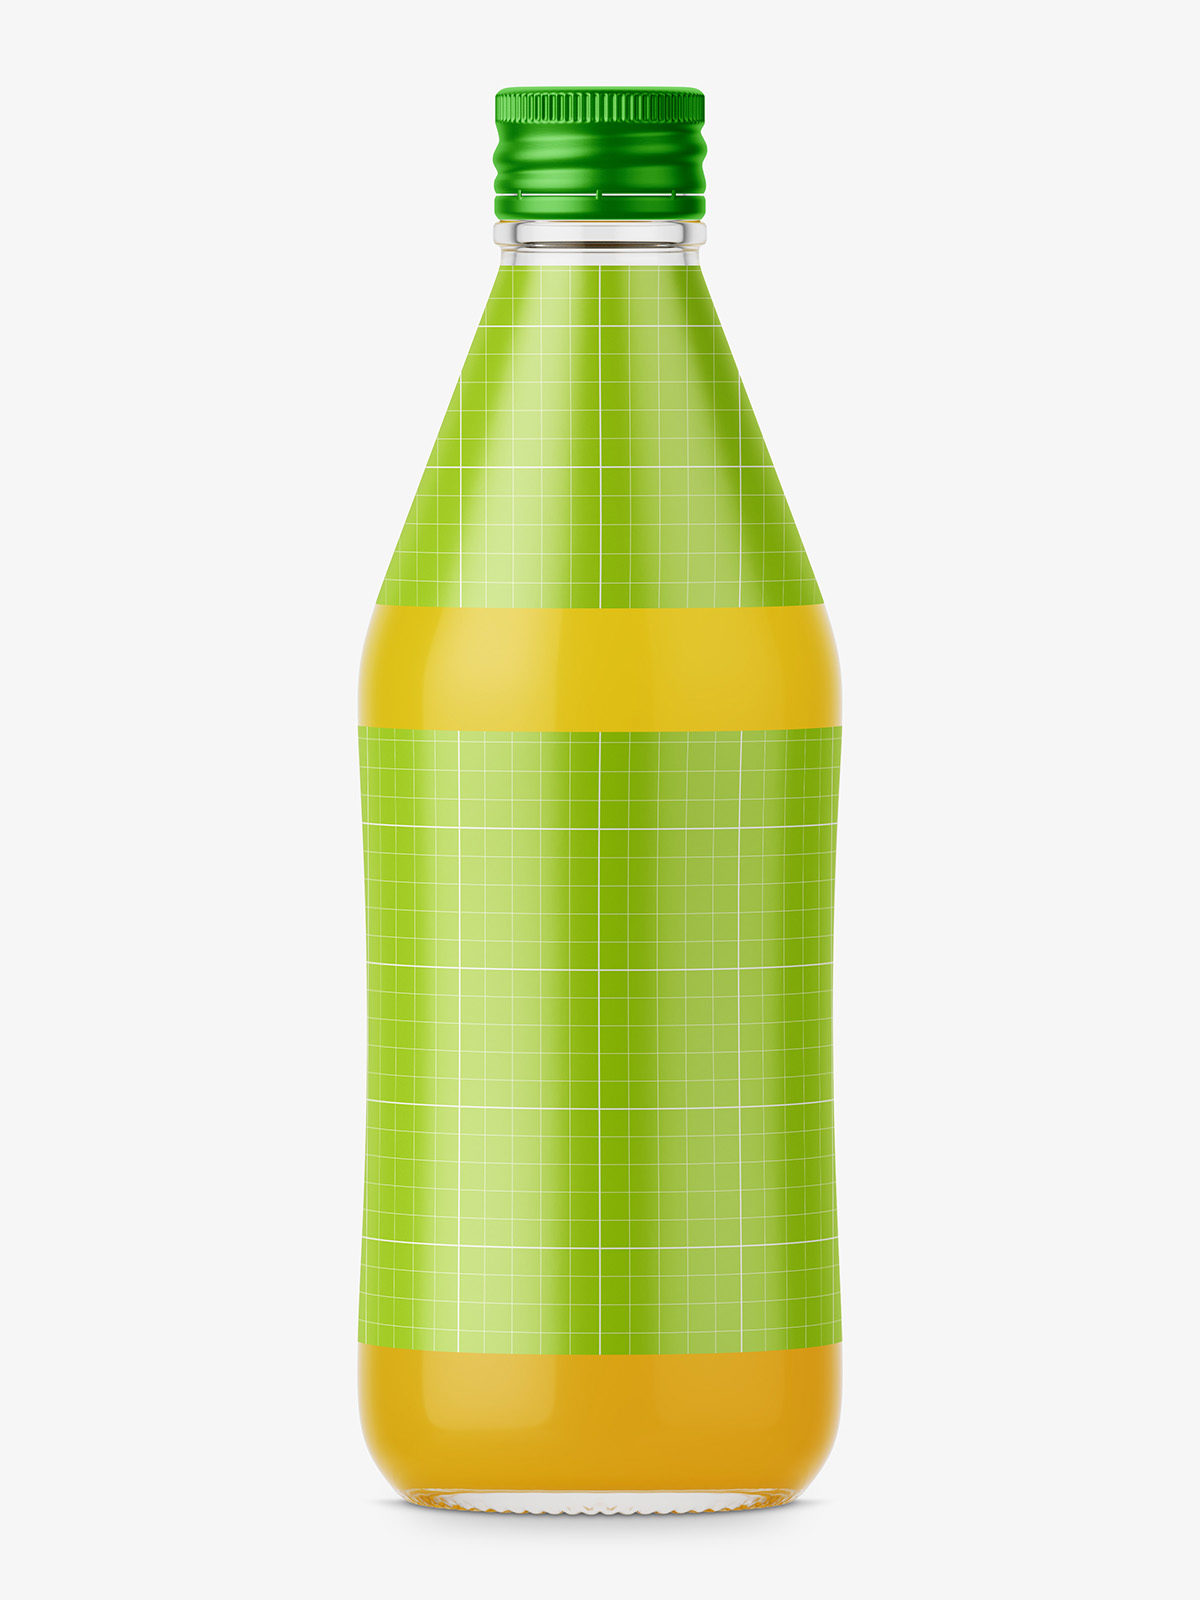 Orange juice bottle mockup - Smarty Mockups